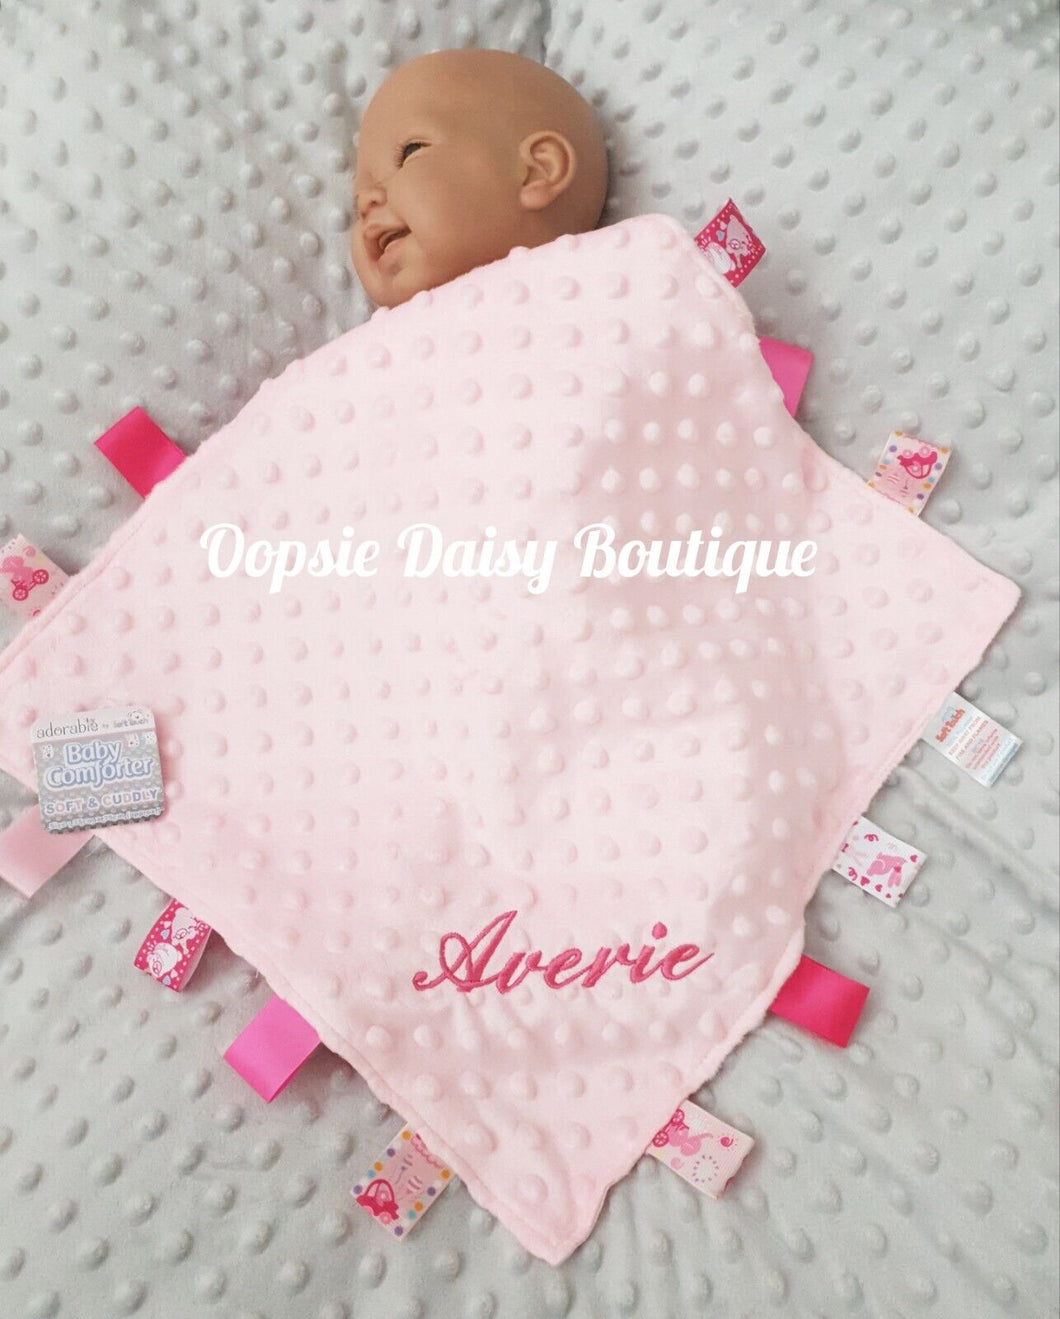 Personalised Baby Comforter Taggie Blanket